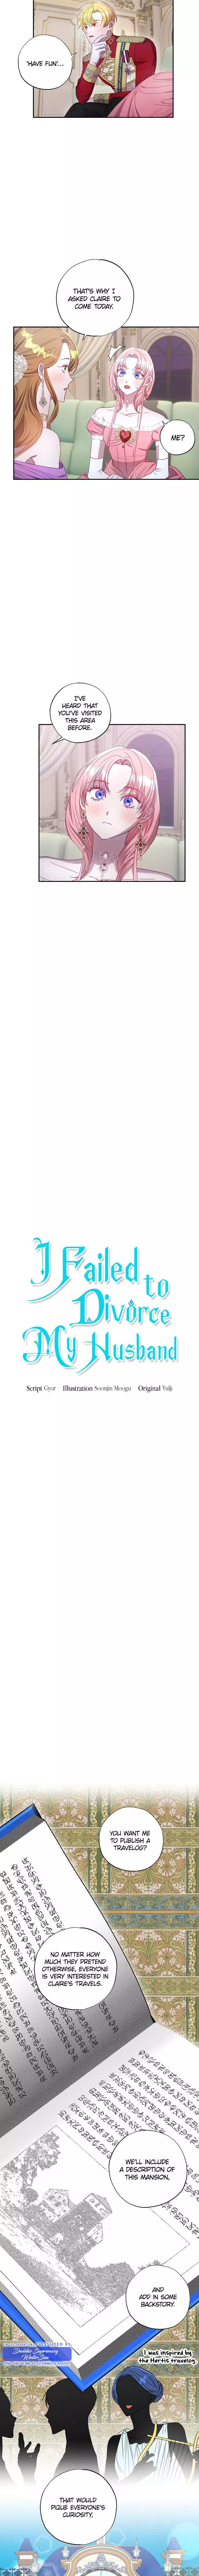 I Failed To Divorce My Husband - 53 page 2-c25b5358